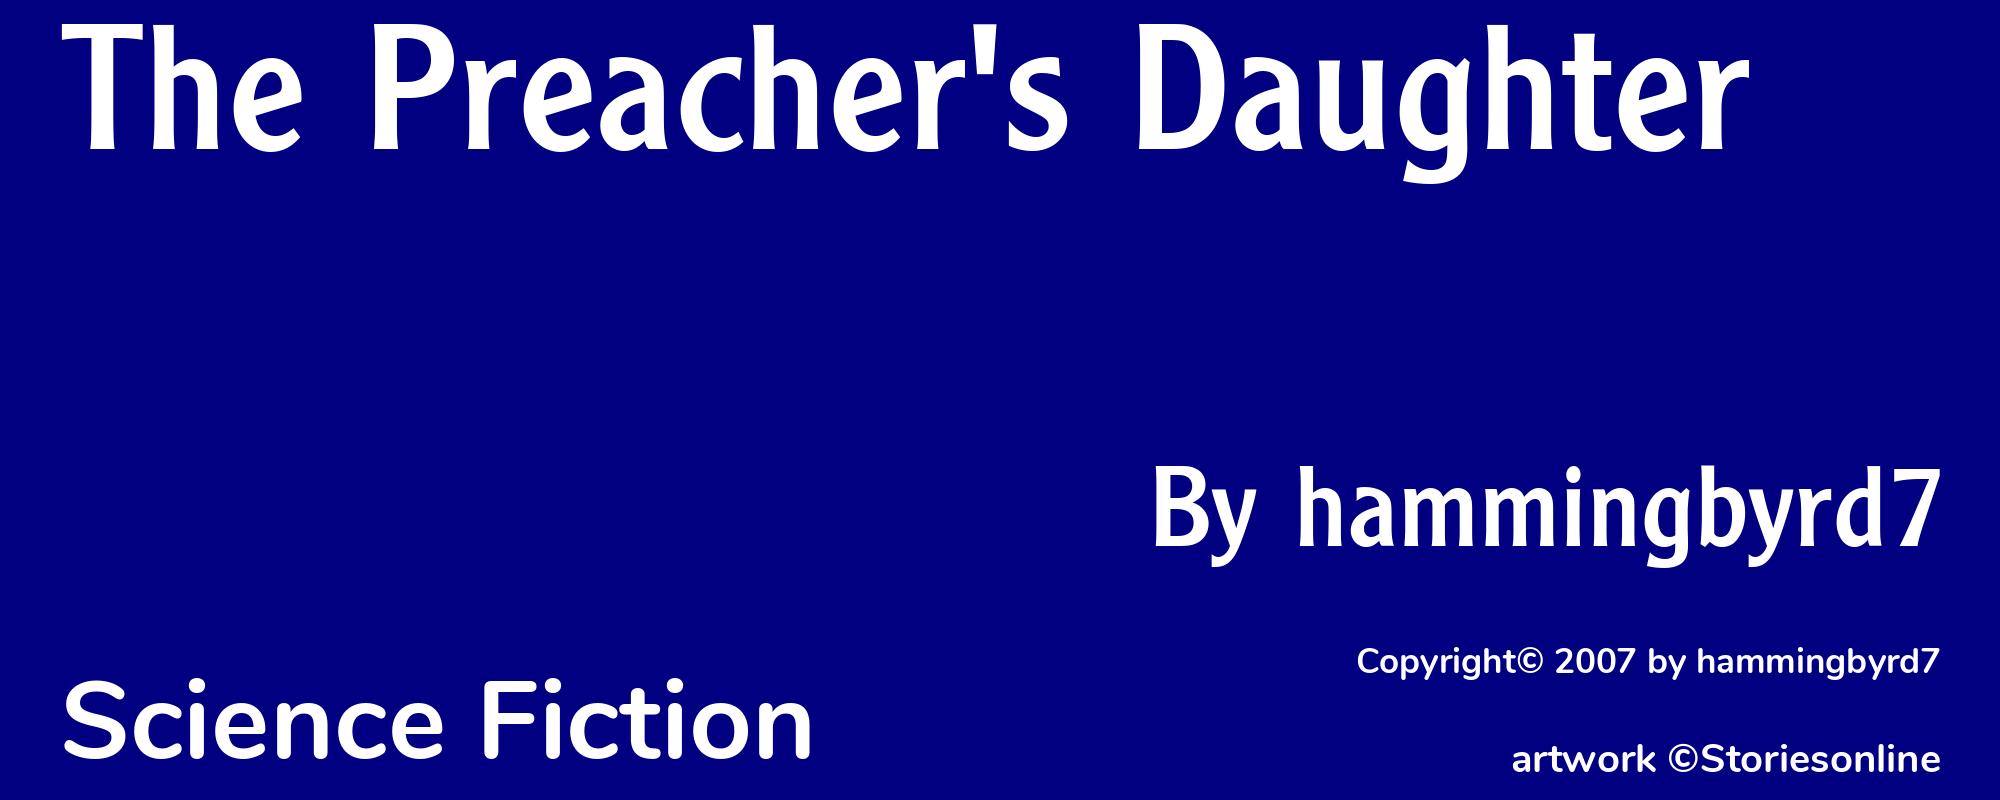 The Preacher's Daughter - Cover